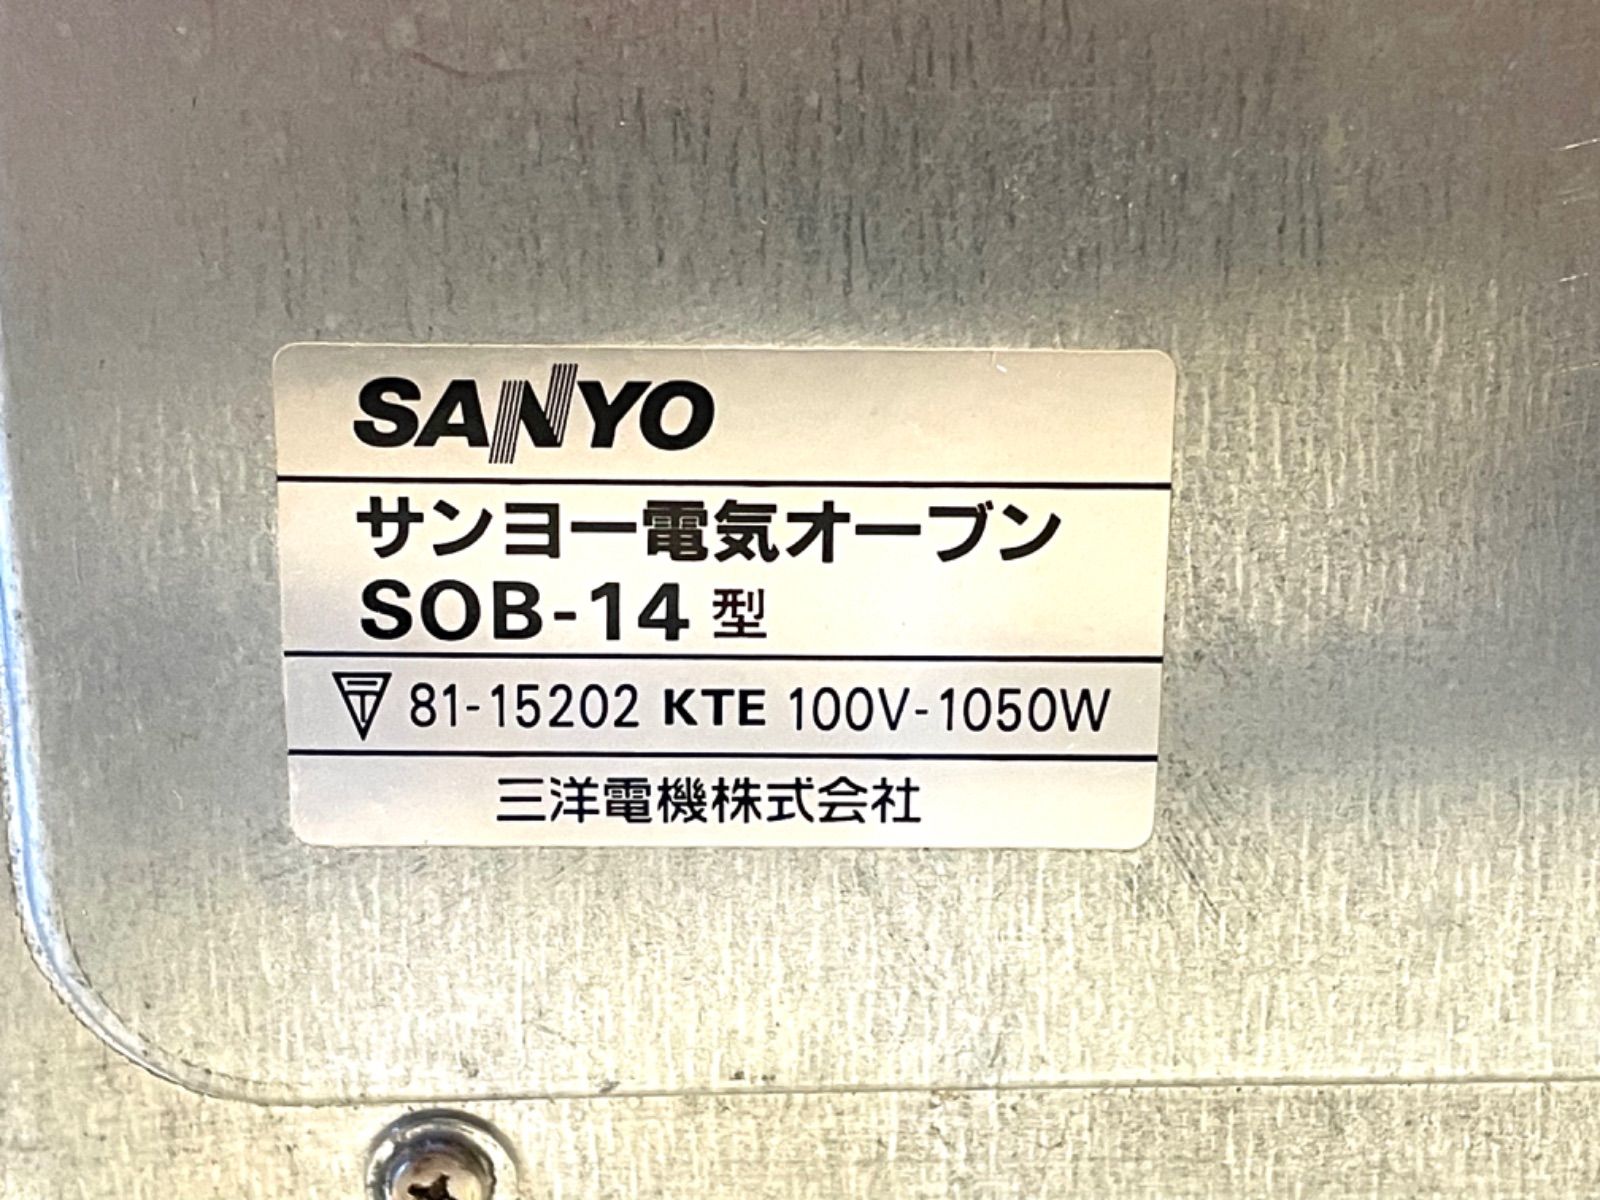 SANYO SOB-14 - 電子レンジ/オーブン